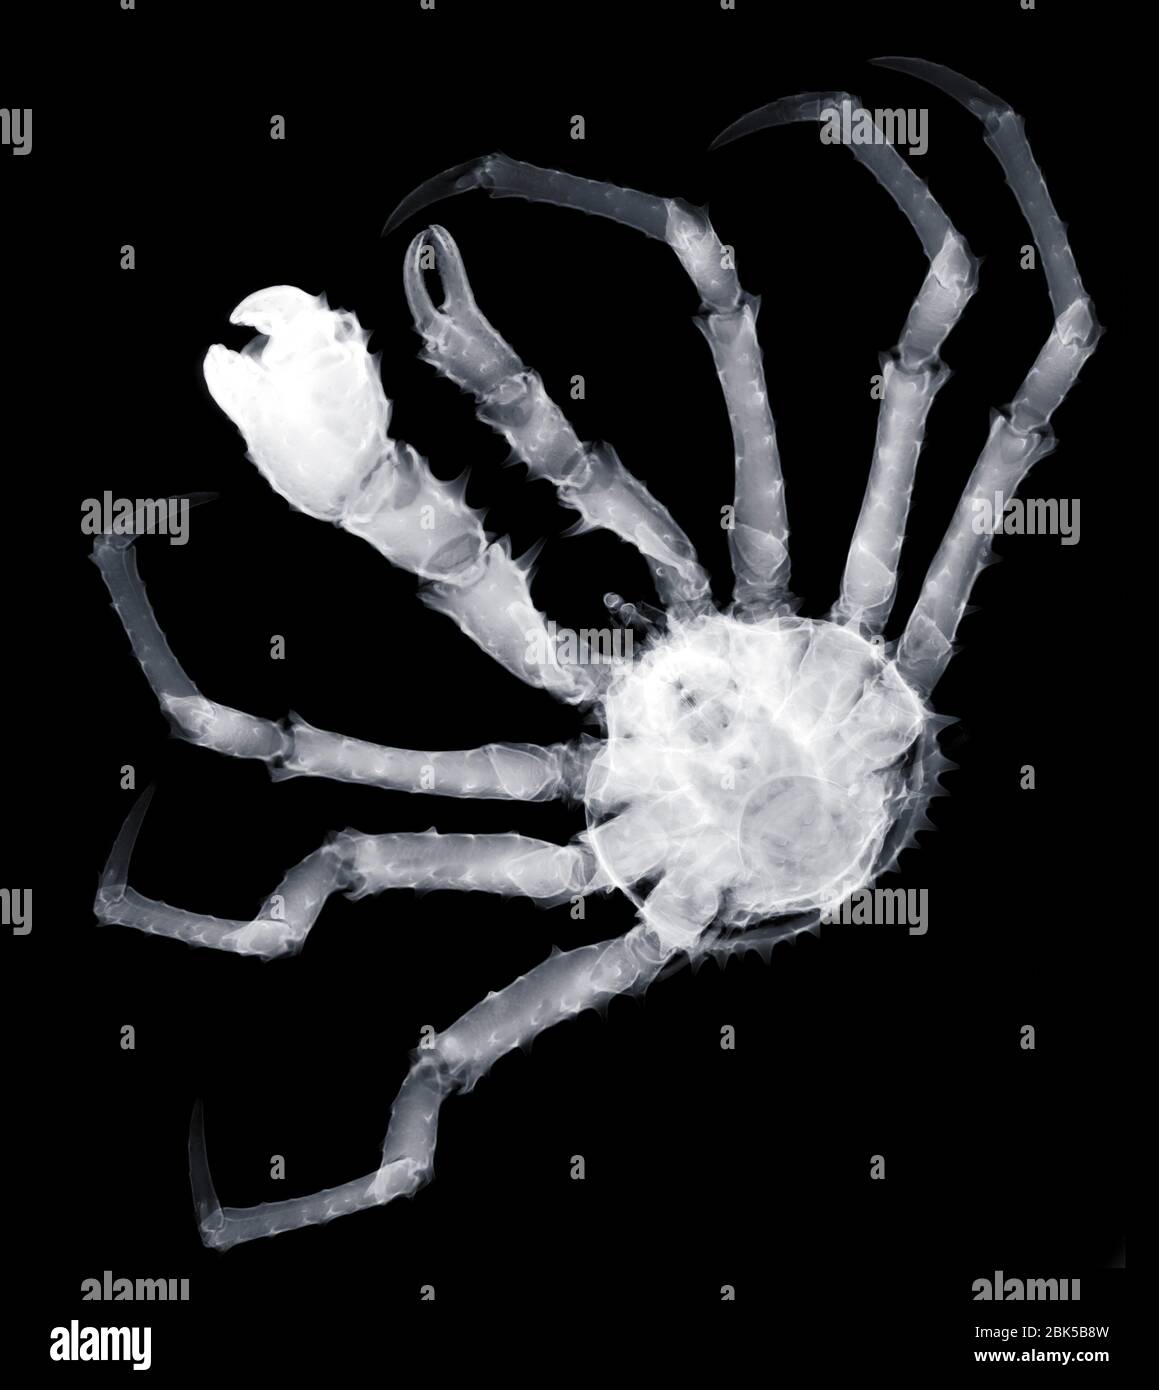 Crabe araignée (Maja squinado), rayons X. Banque D'Images